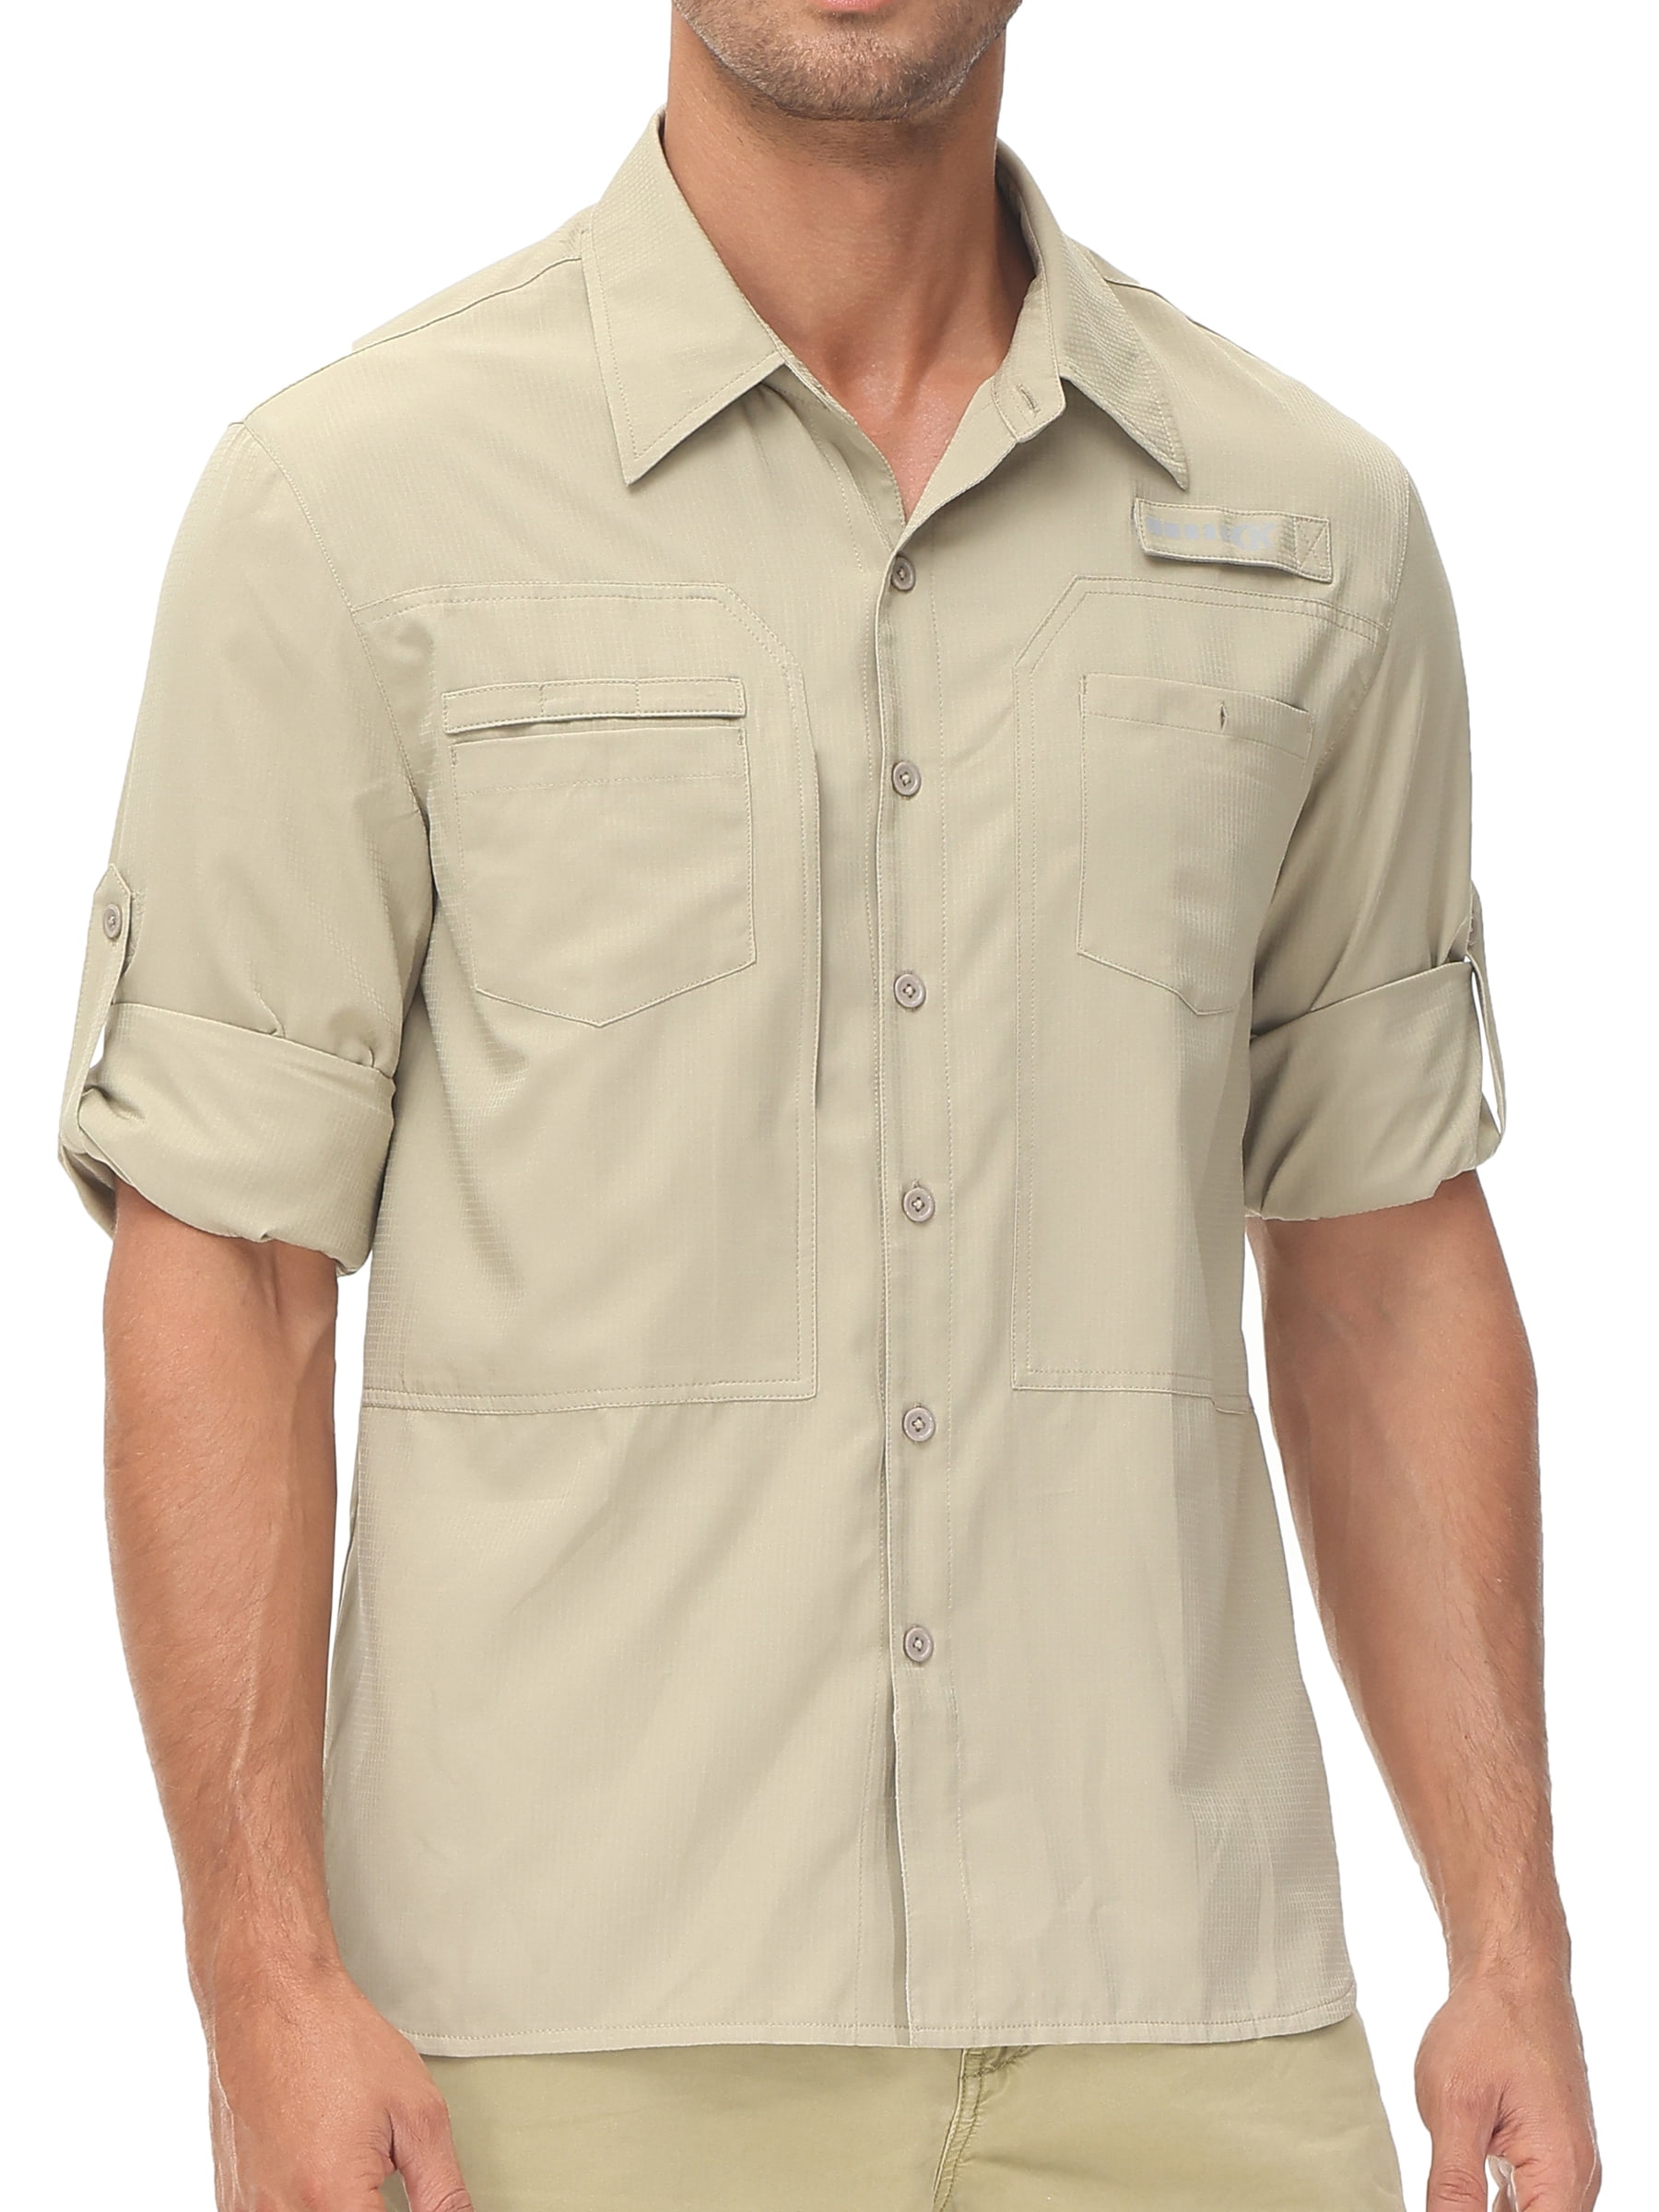 Men's Fishing Shirts with Zipper Pockets UPF 50+ Lightweight Cool Short  Sleeve Button Down Shirts